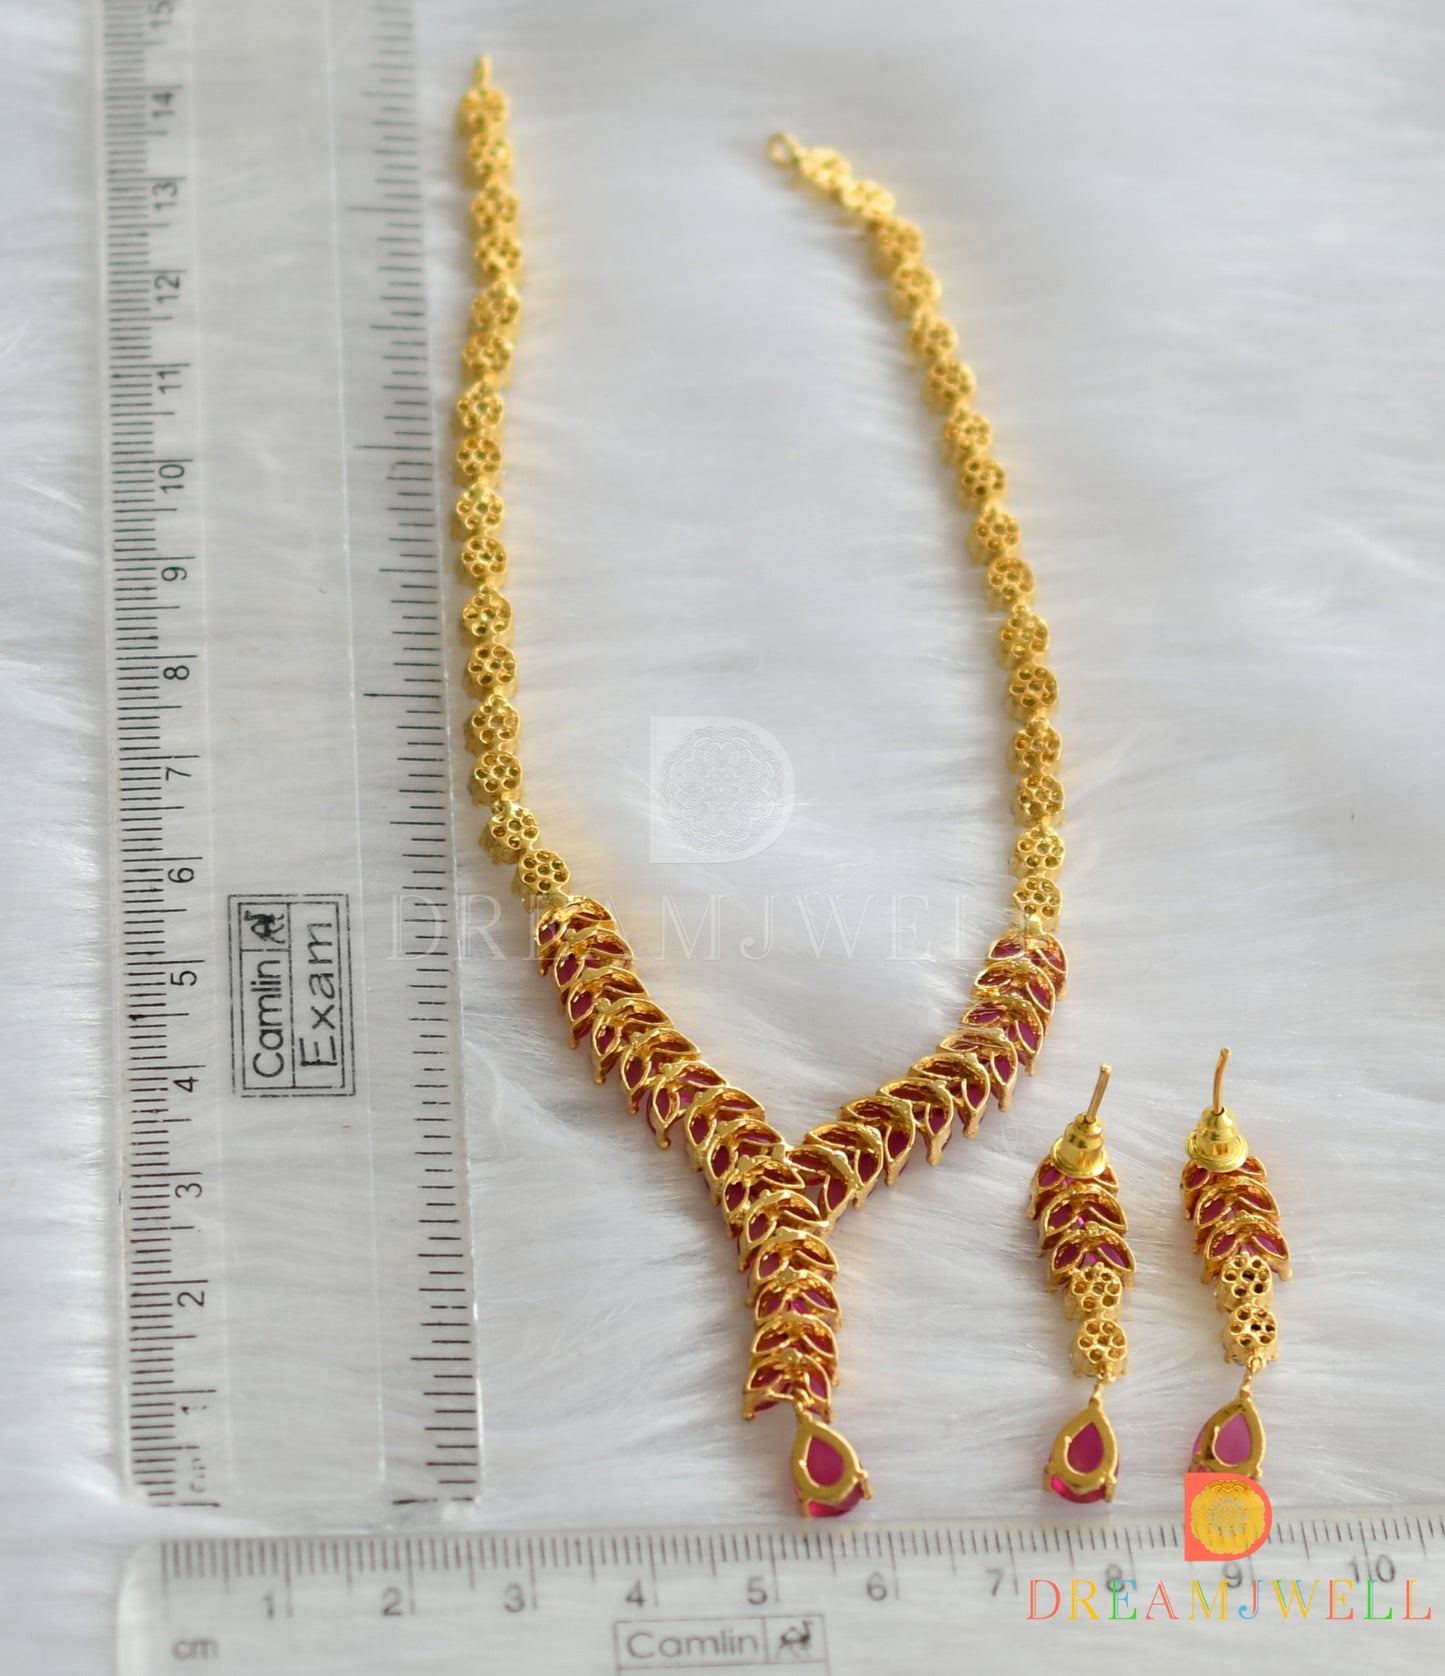 Gold tone cz-ruby necklace set dj-15225